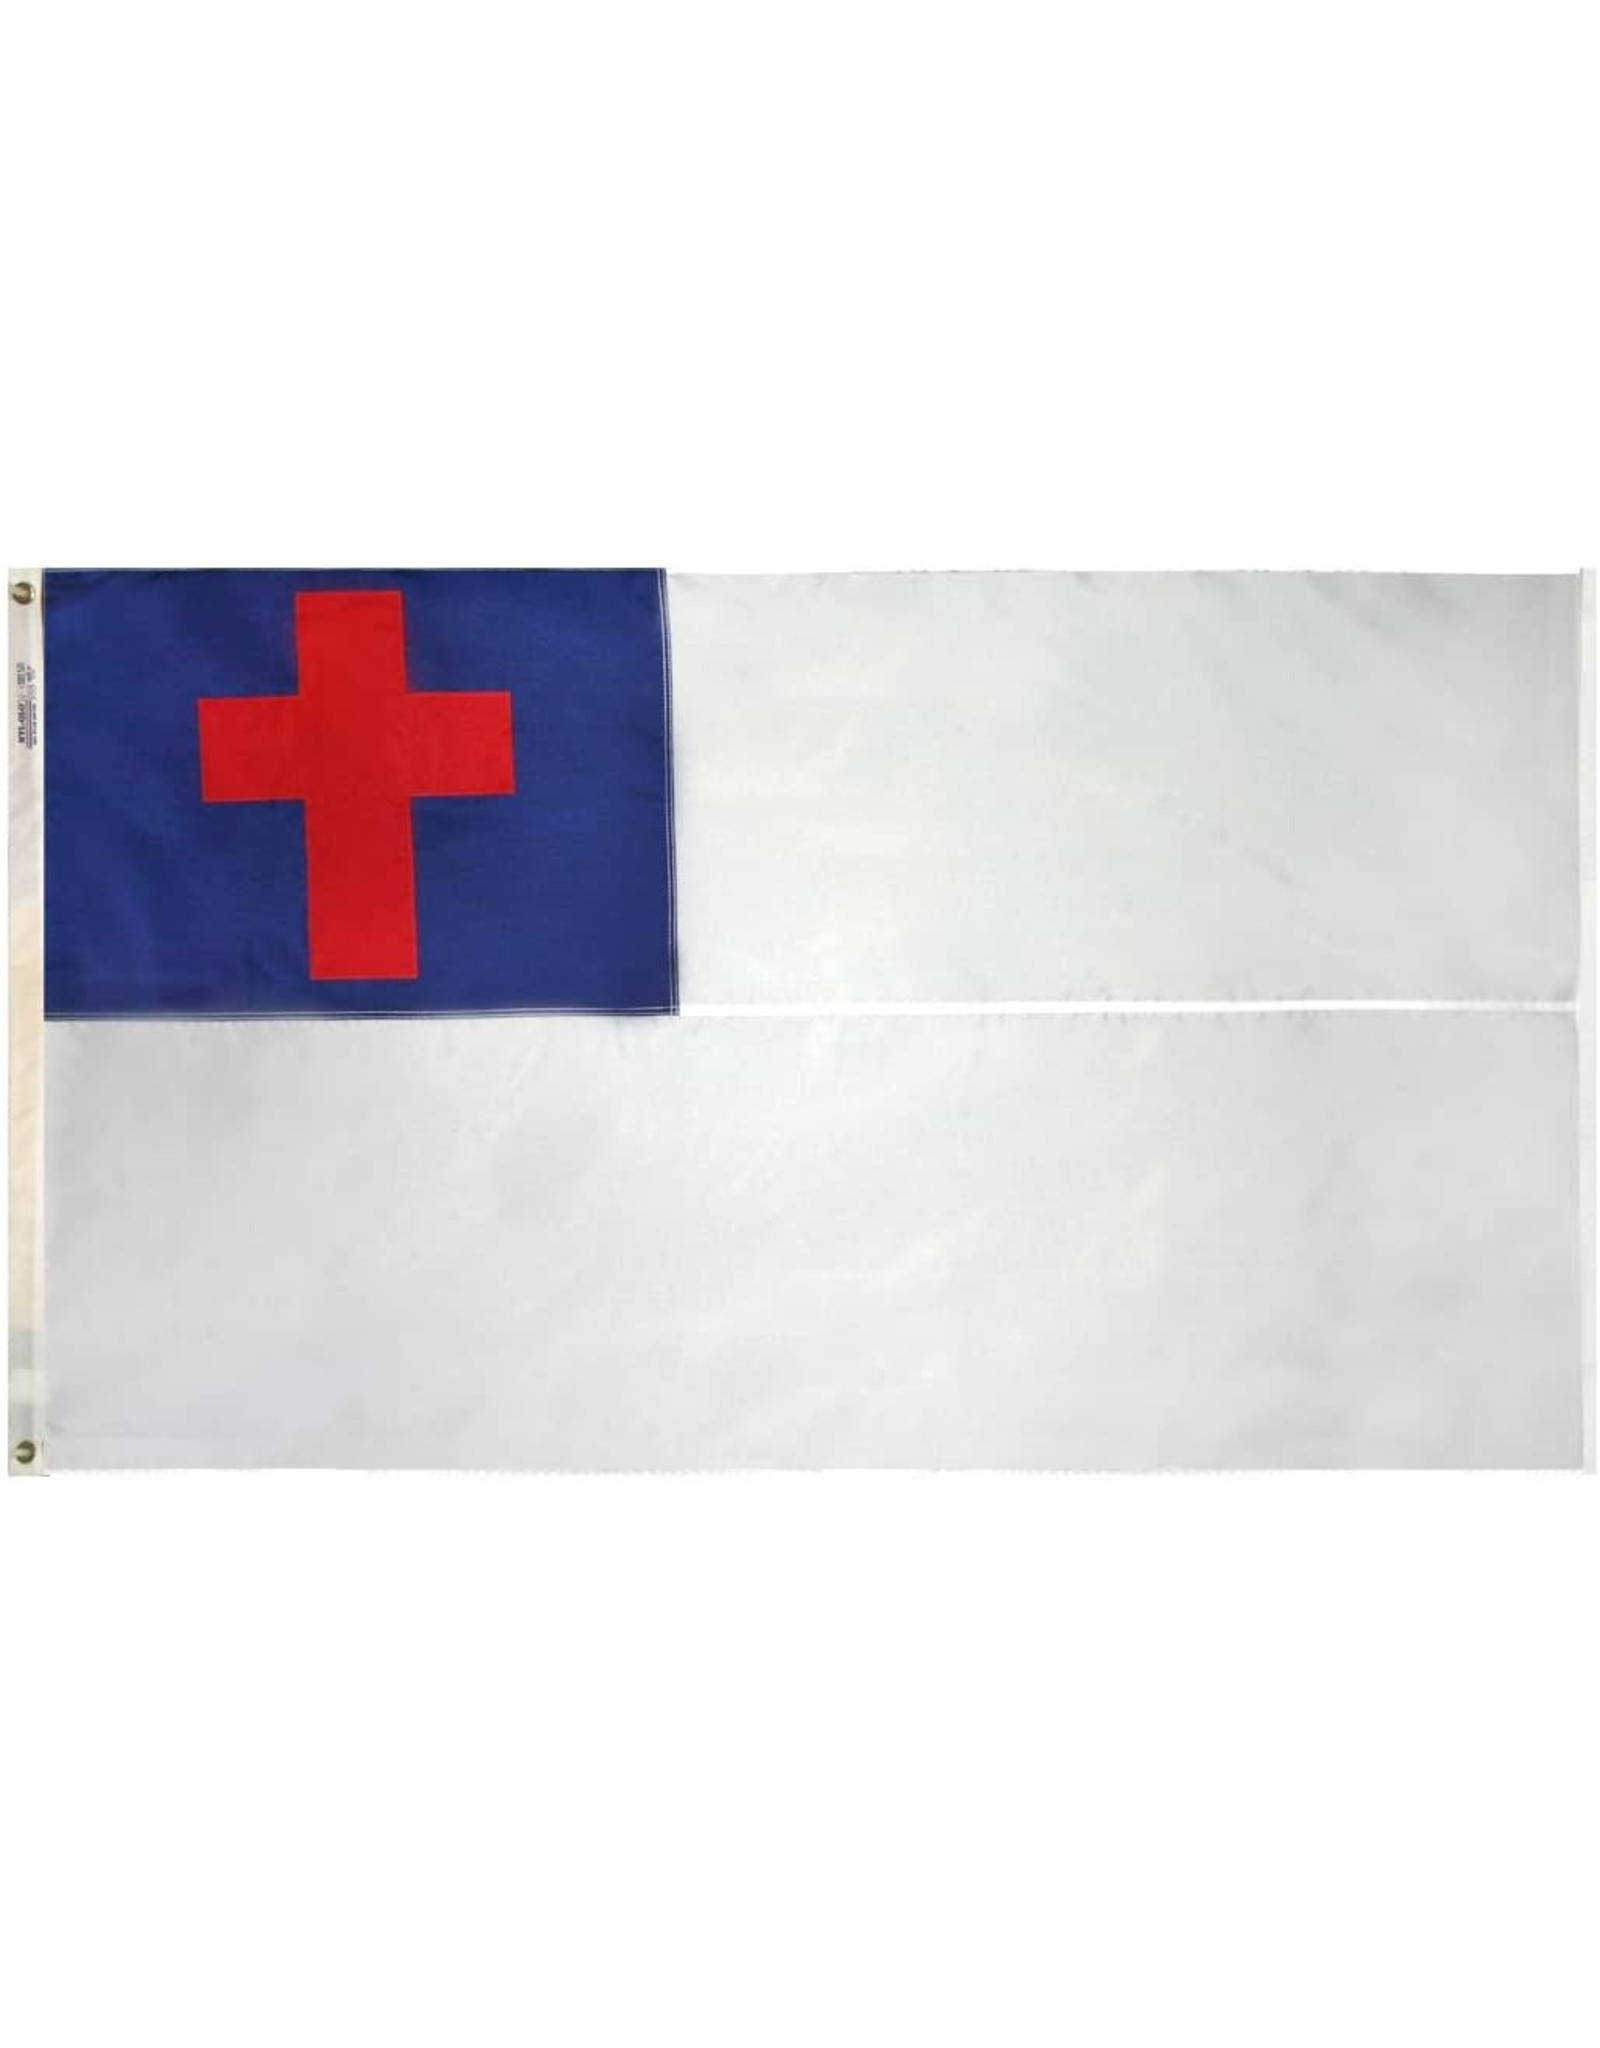 Annin Christian Flag - 2' x 3' Nylon Glo